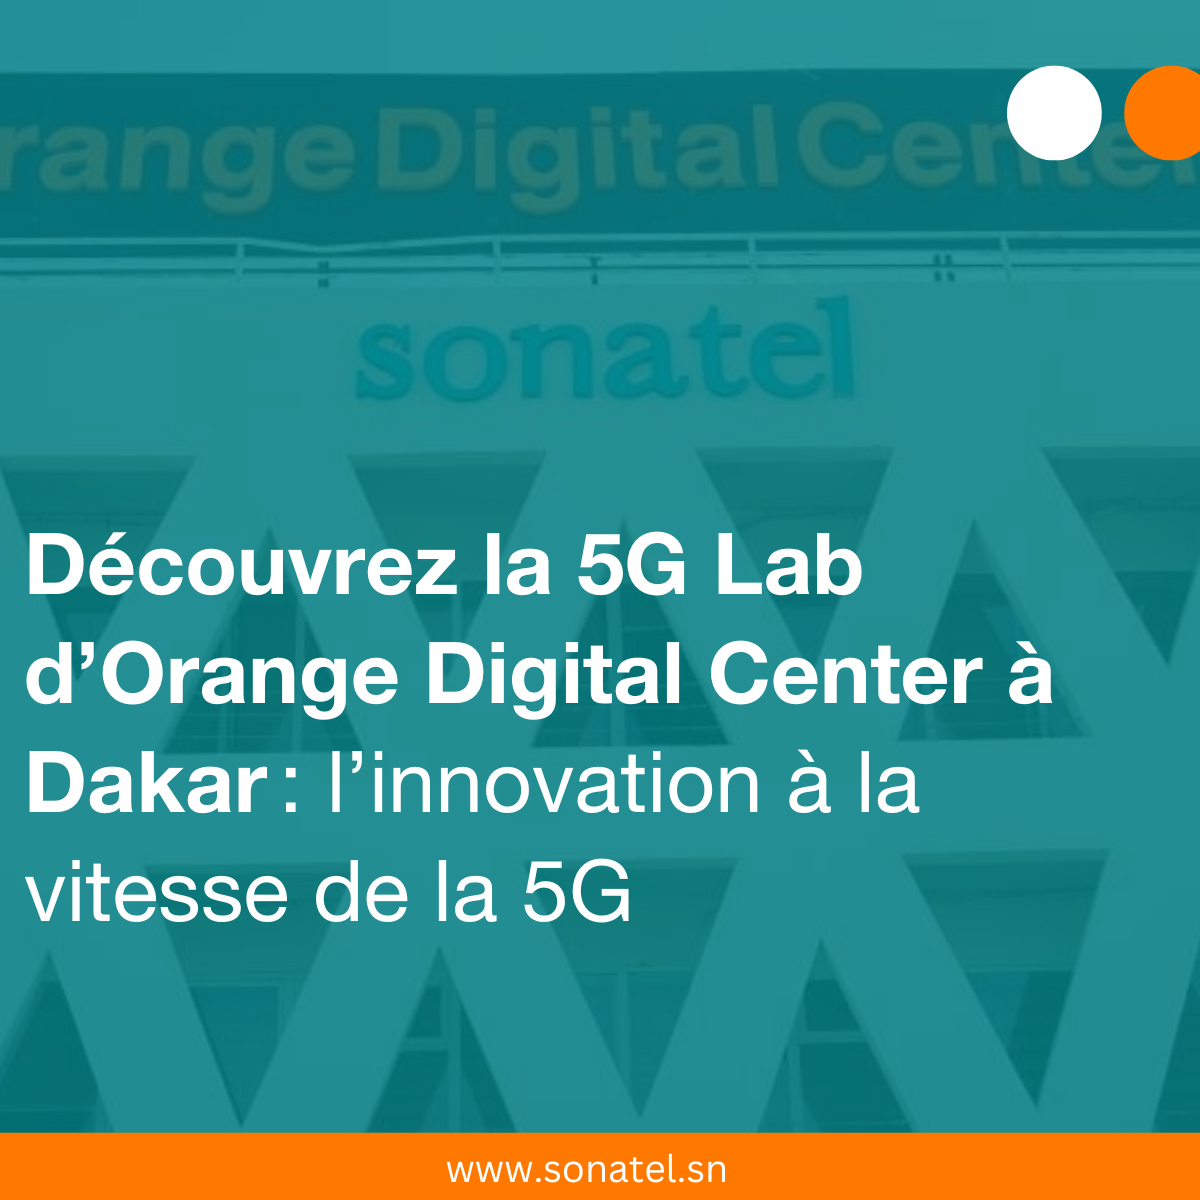 5G lab Orange Digital Center de Dakar